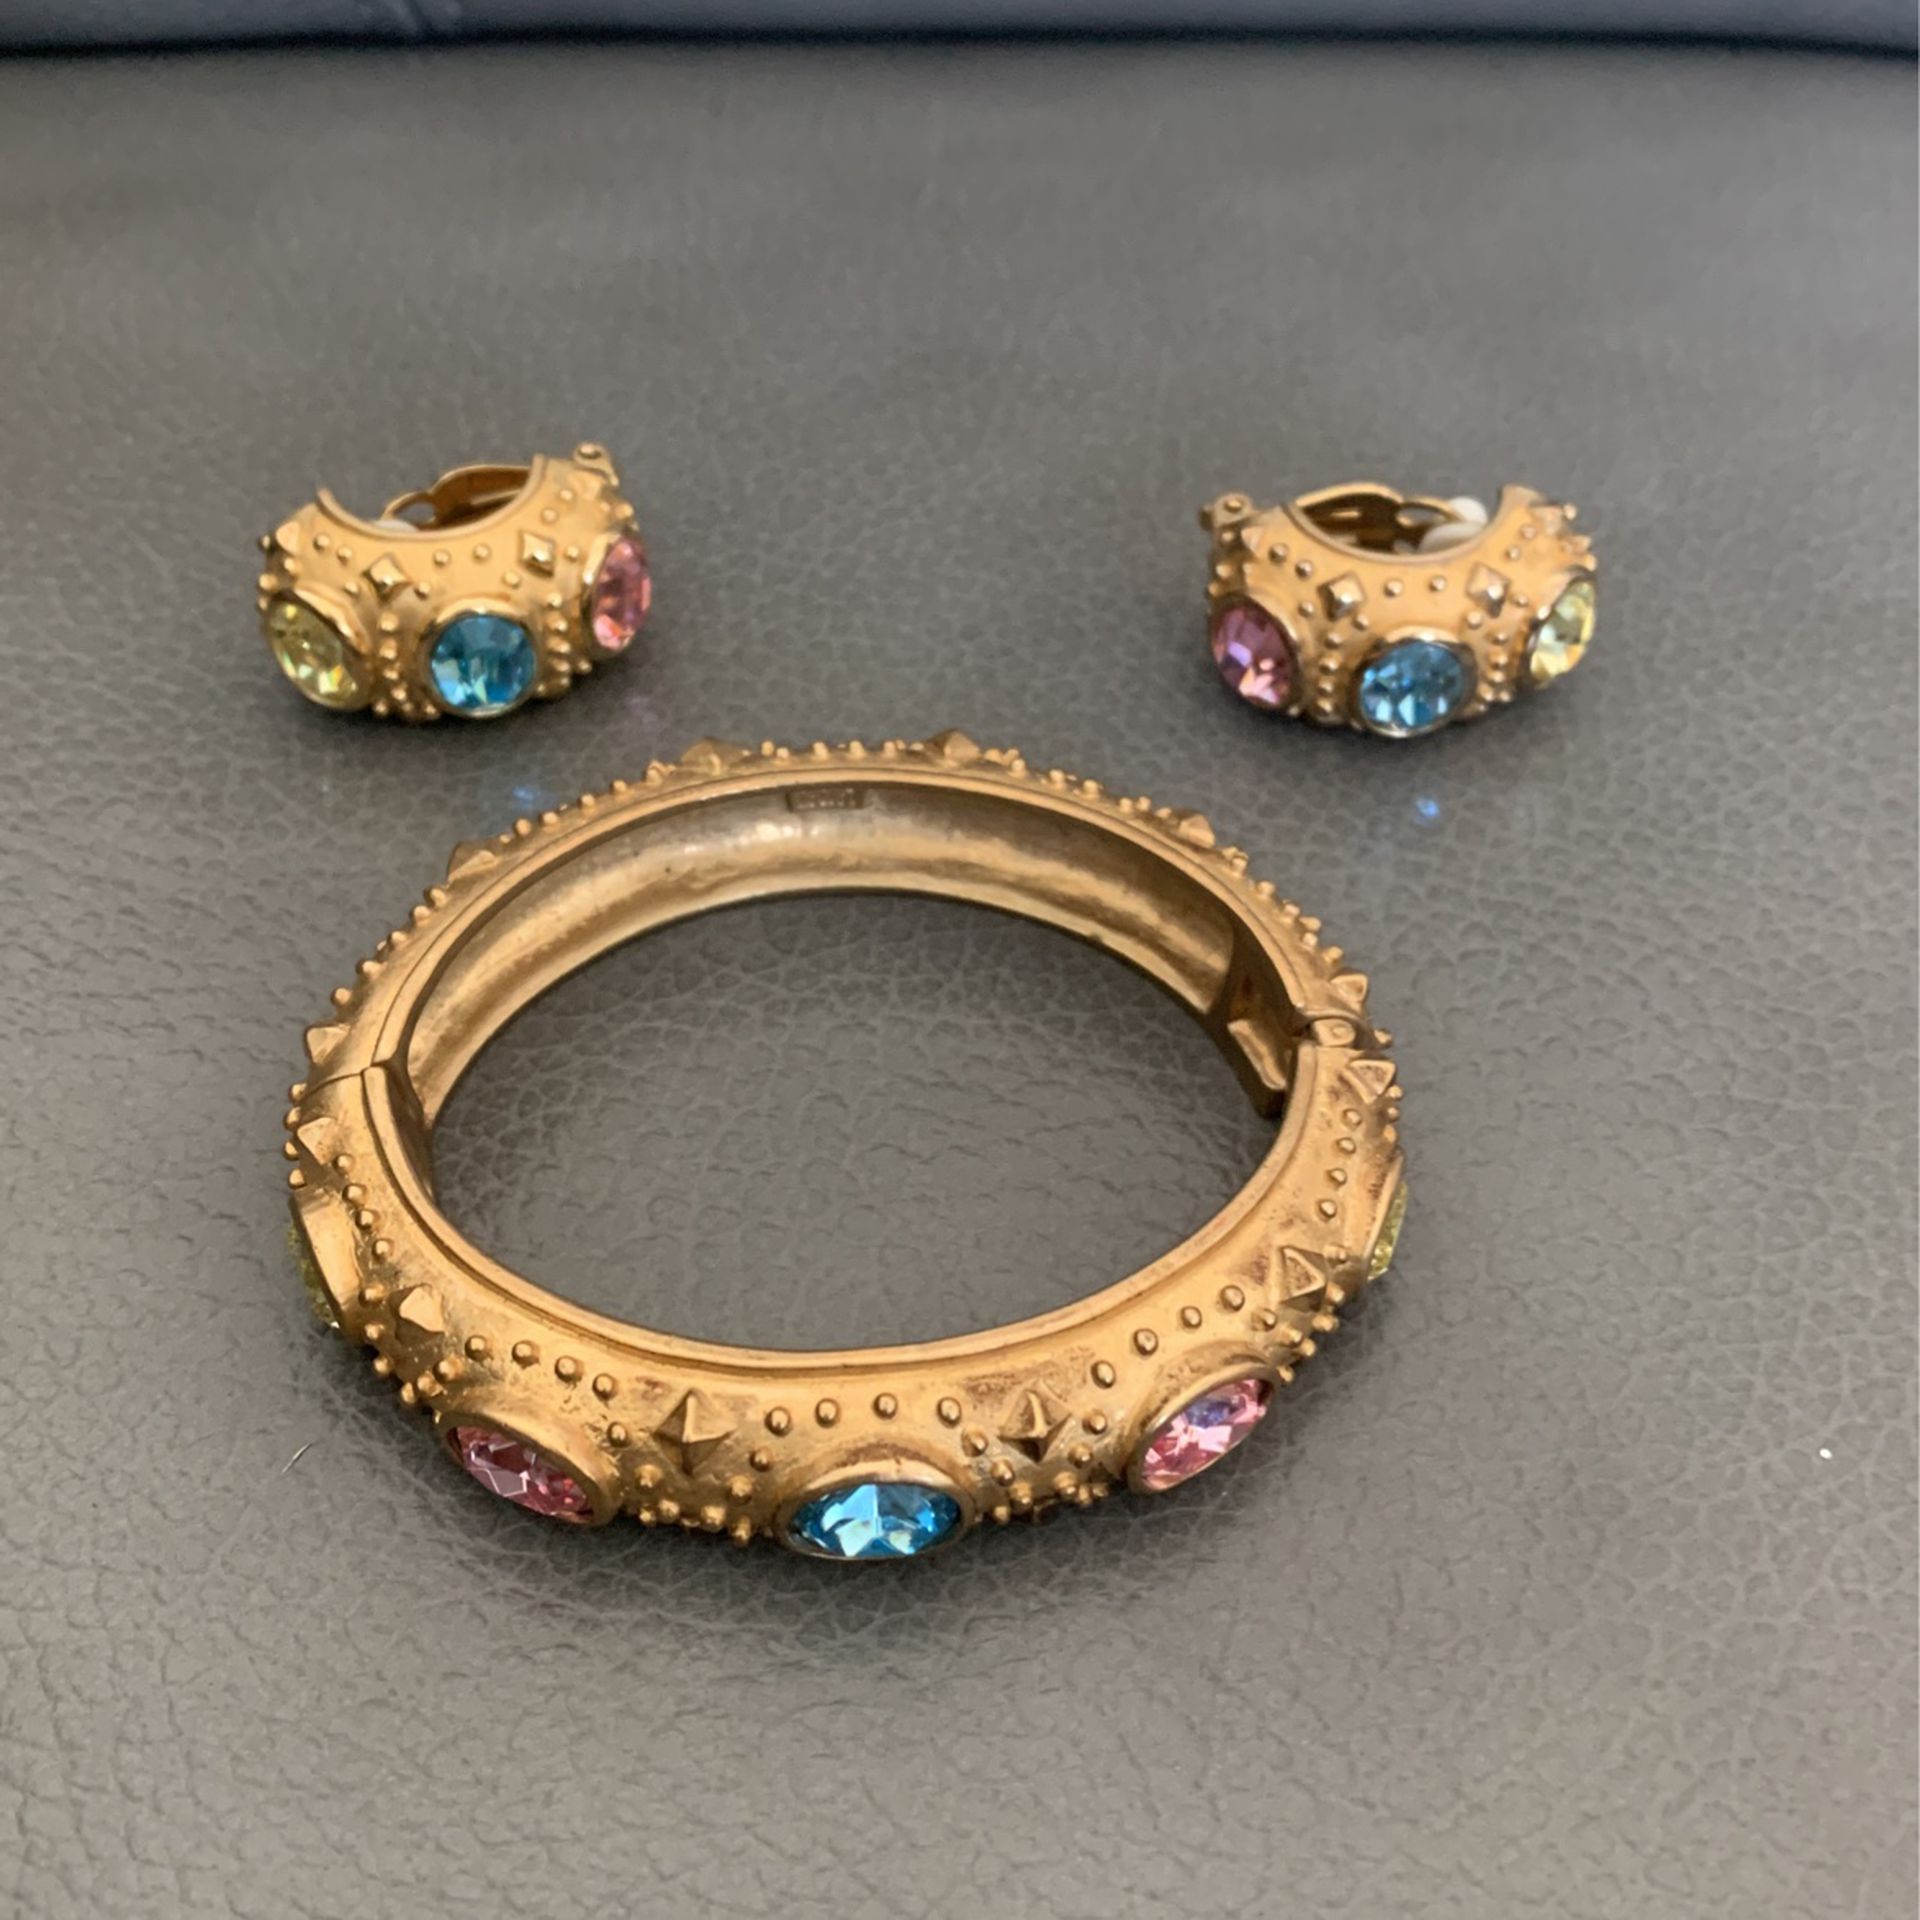 Landau Hinged Jeweled Bracelet & Earrings